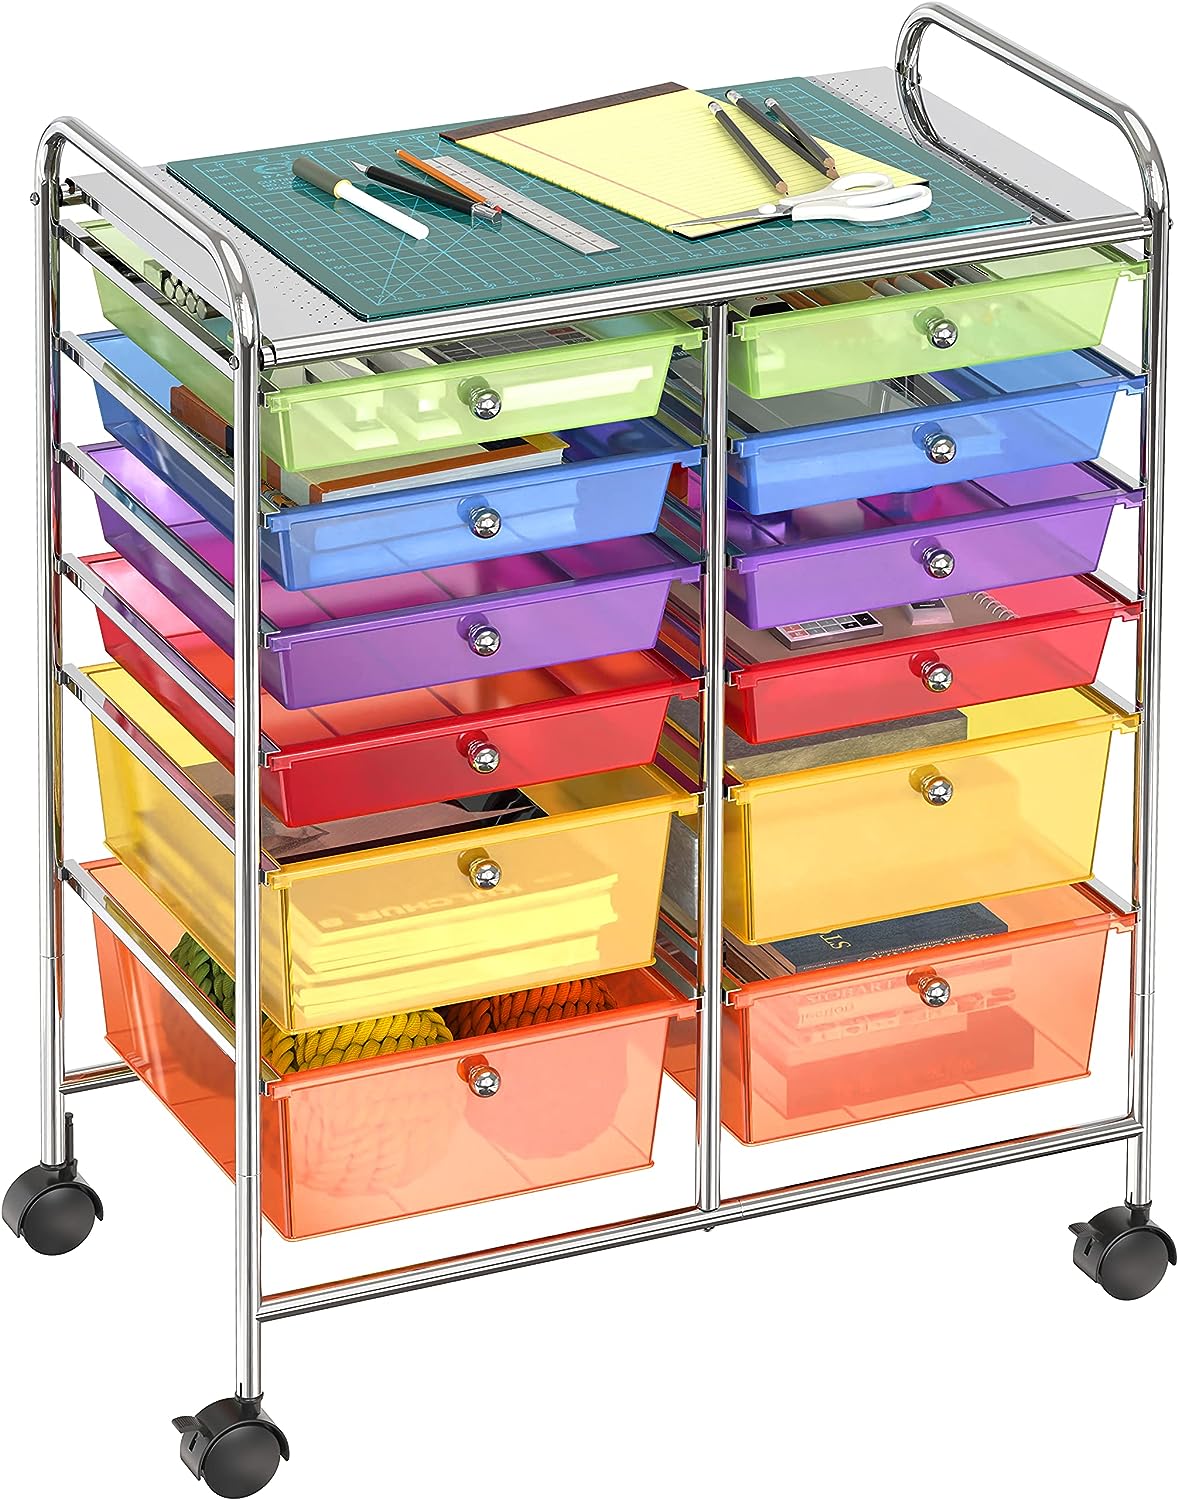 SimpleHouseware 8-Drawers Rolling Storage Cart, Chrome